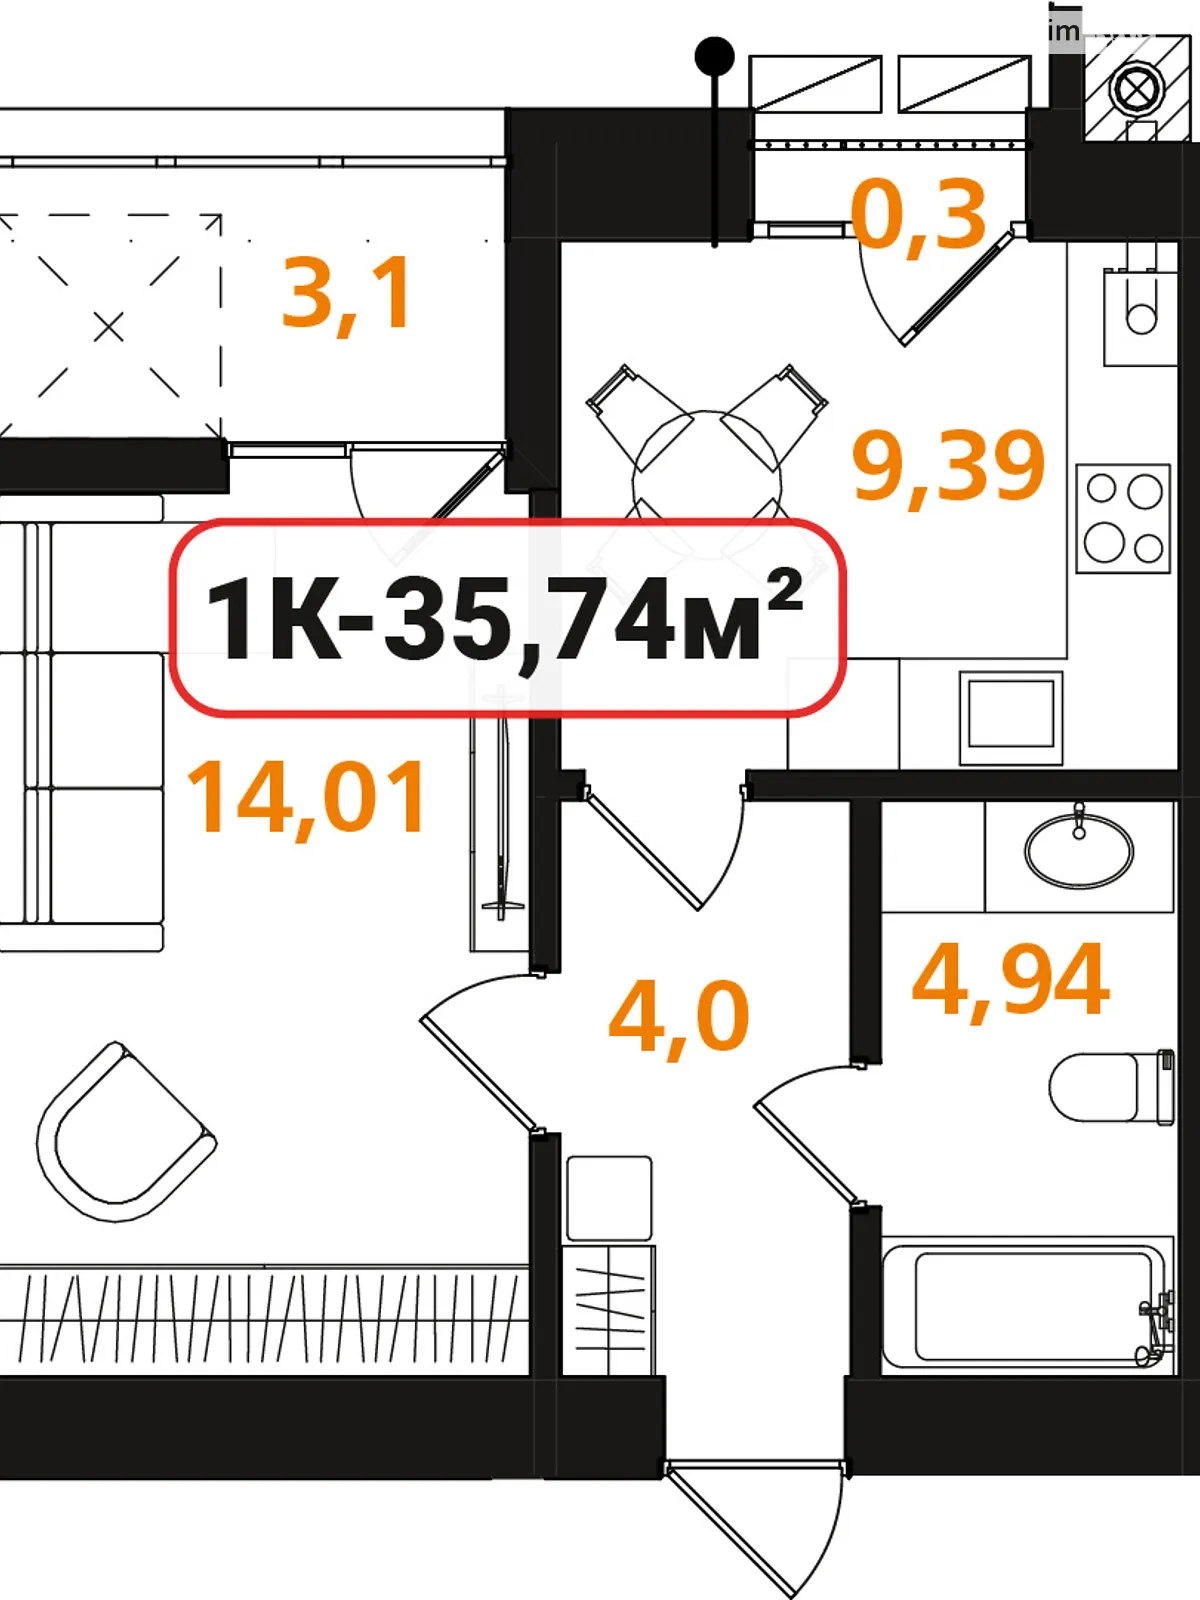 Продается 1-комнатная квартира 35.74 кв. м в Ивано-Франковске, ул. Отца Блавацкого - фото 1